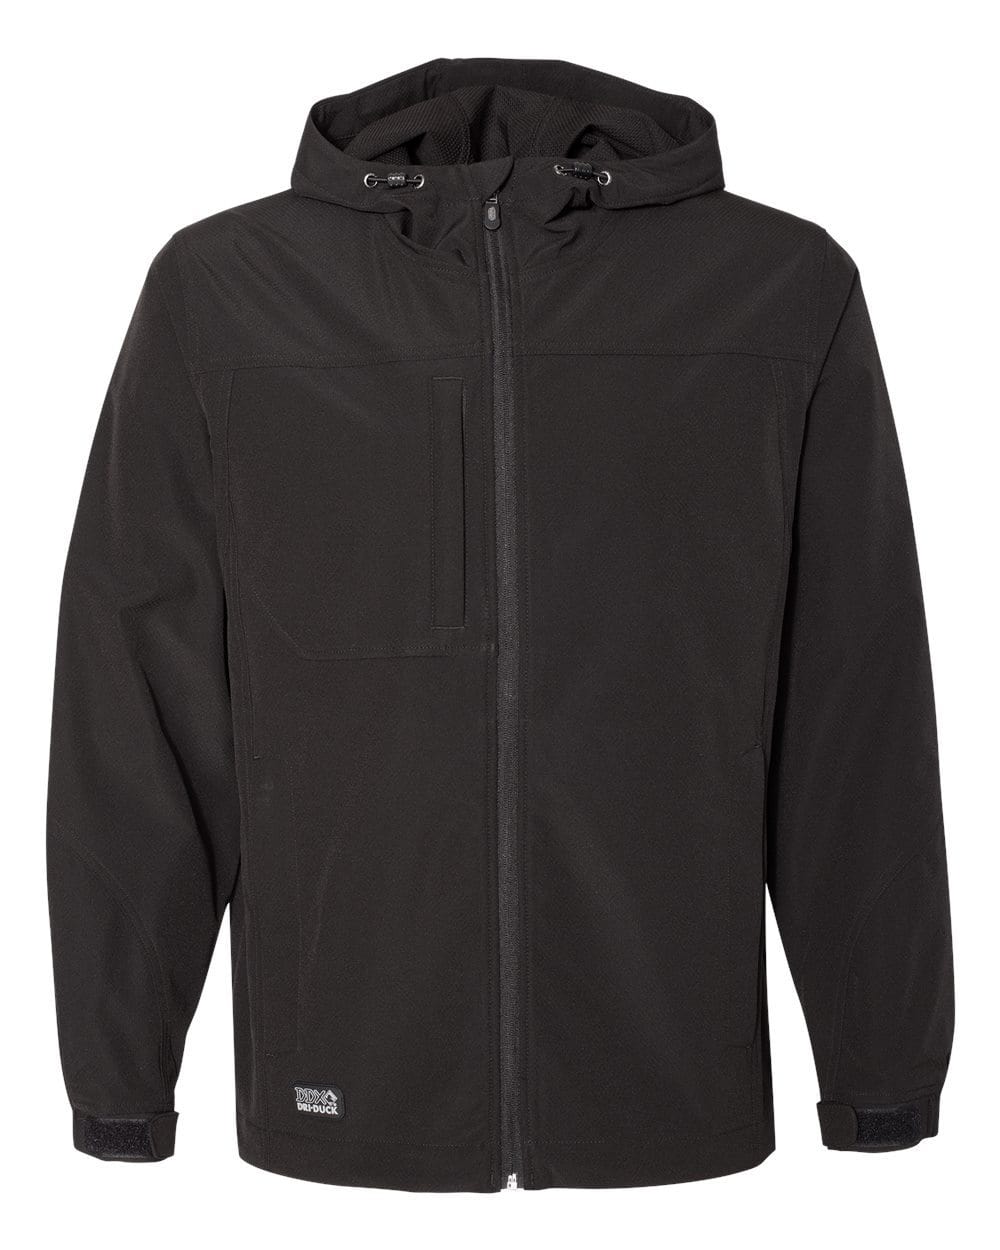 DRI DUCK Outerwear S / Black DRI DUCK - Men's Apex Softshell Hooded Jacket